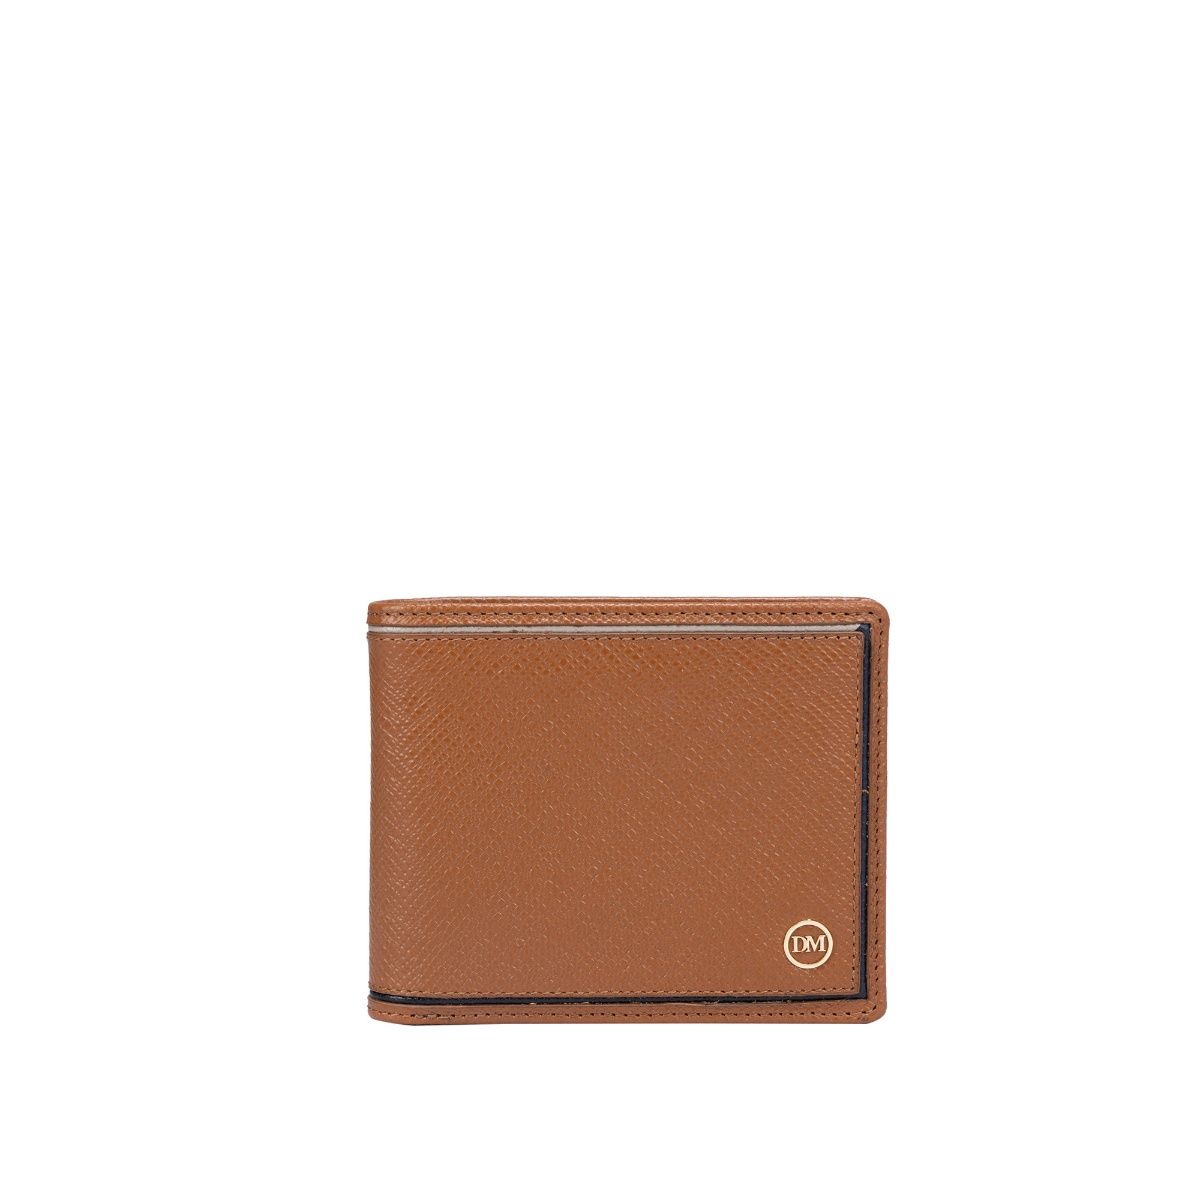 Men's Wallet | Wallet, Leather wallet mens, Card wallet